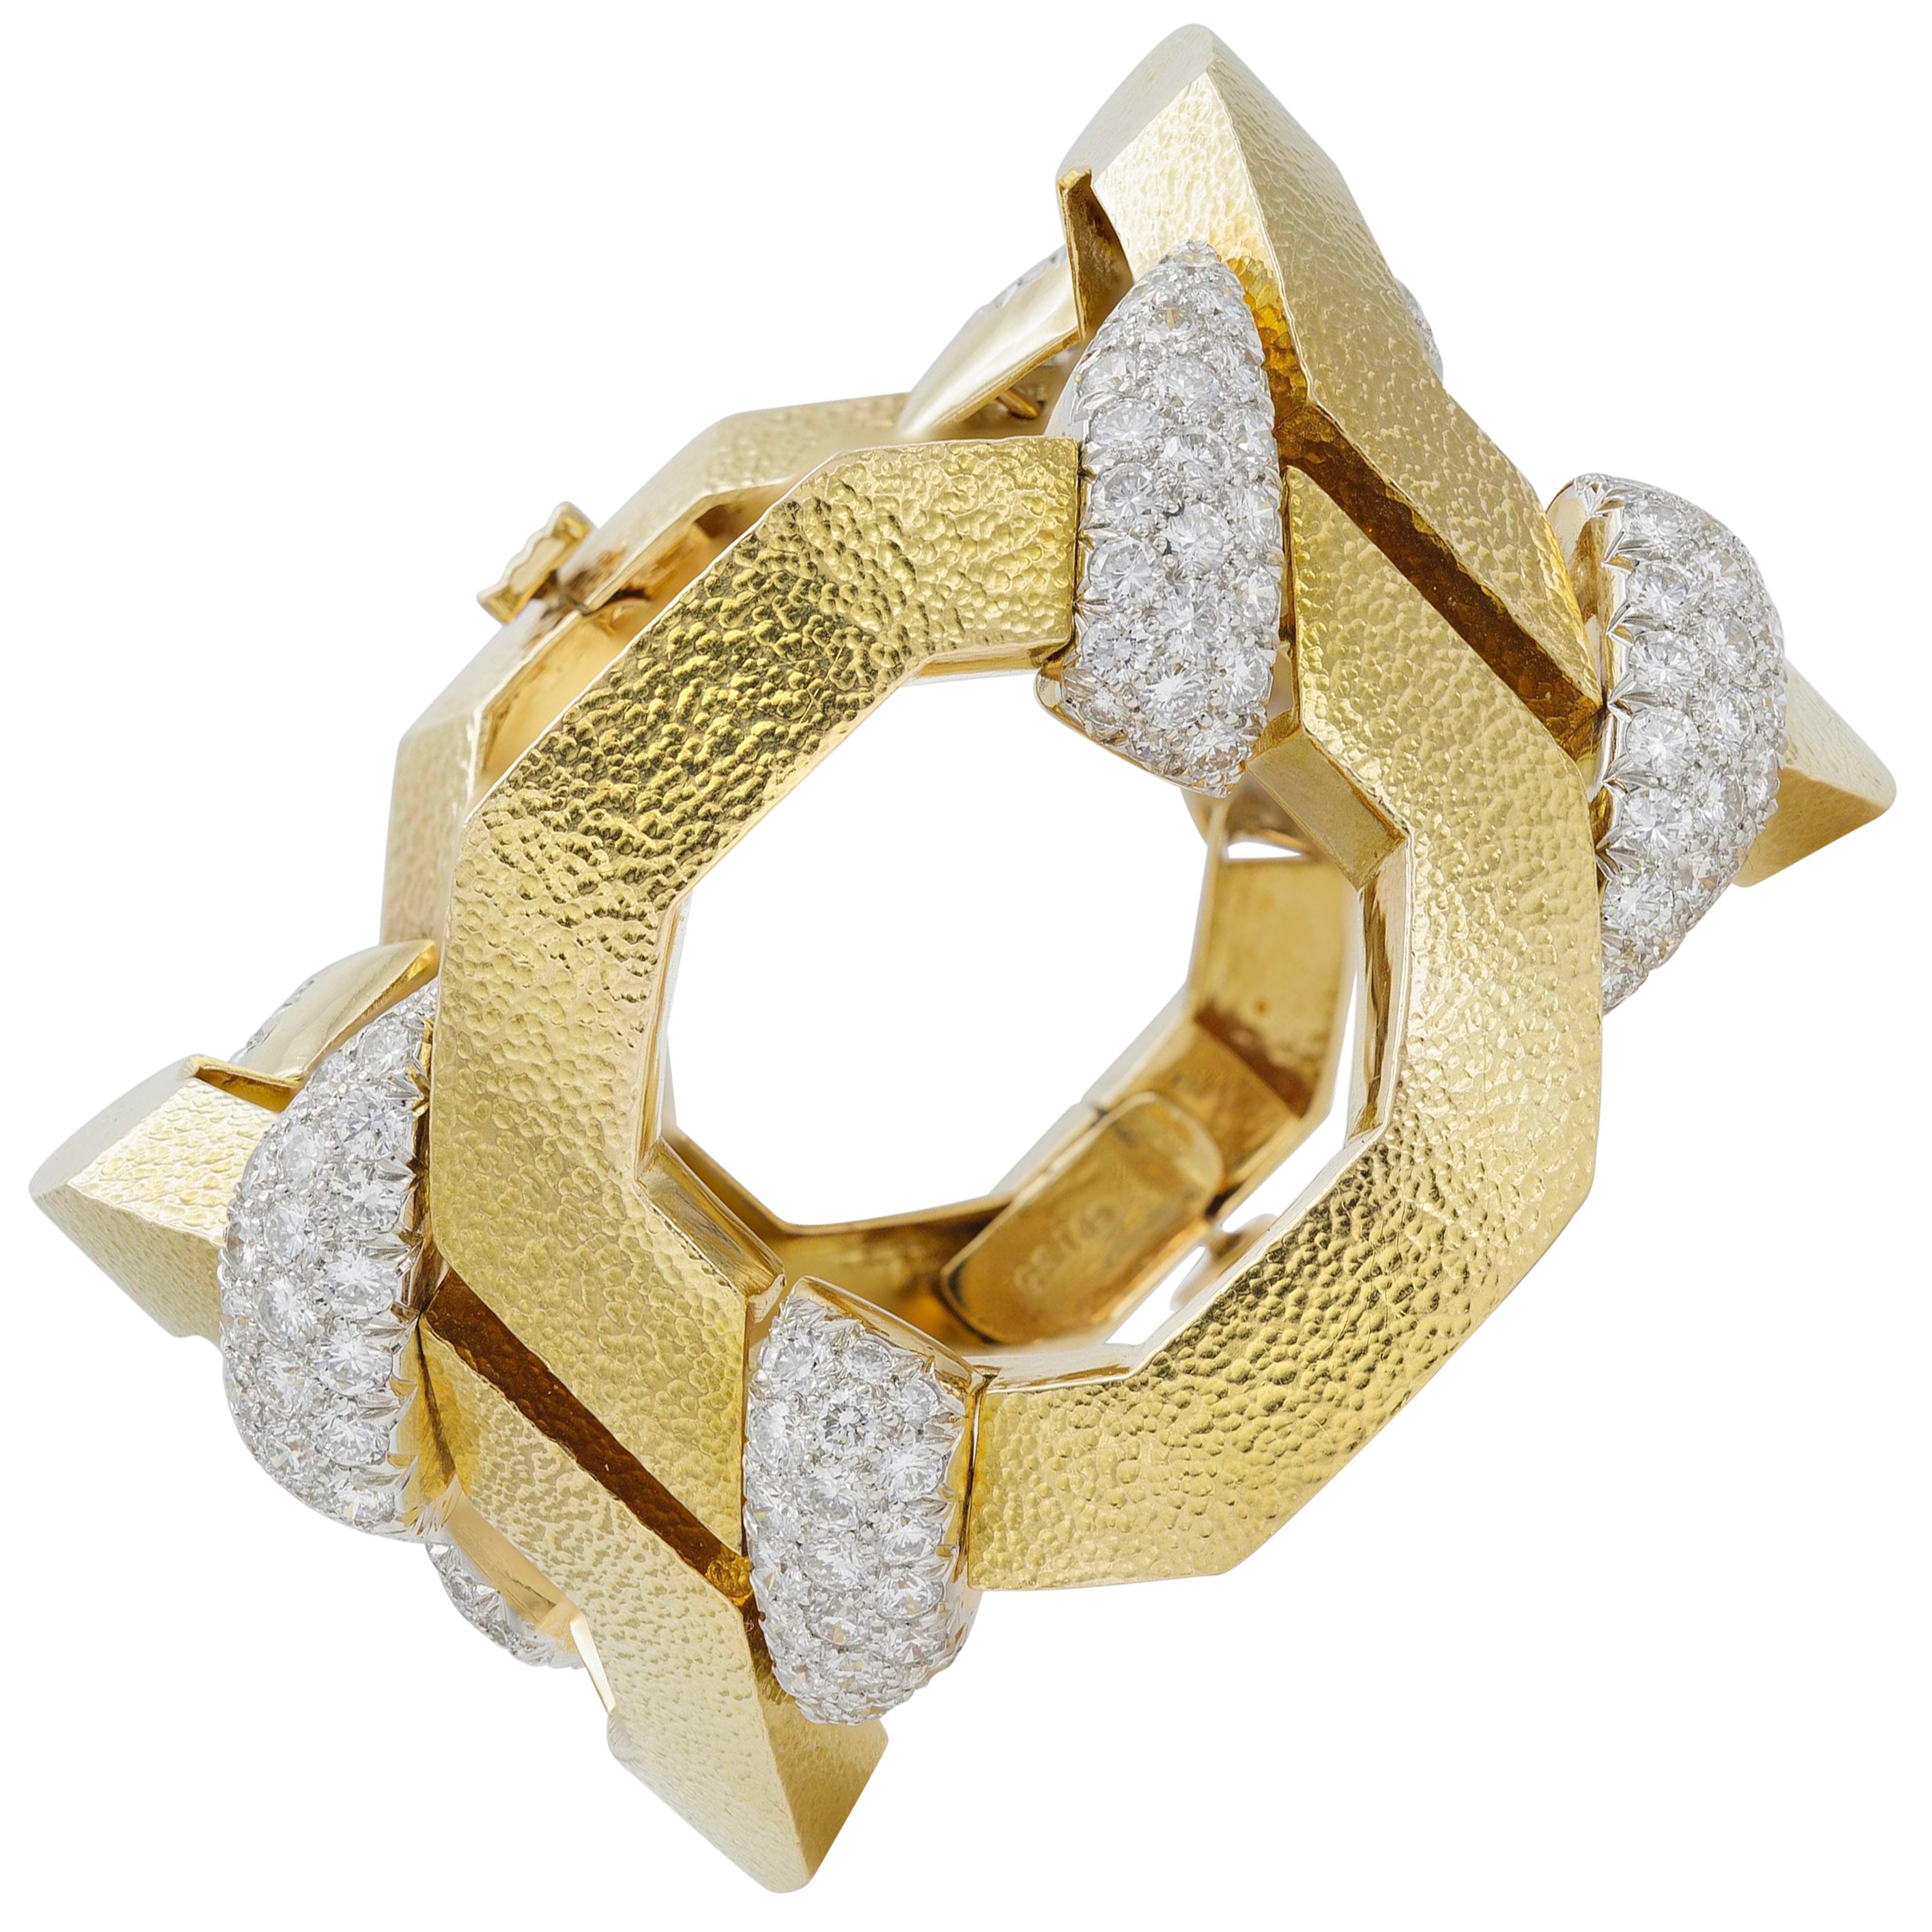 David Webb Hammered Gold "Juno" Bracelet with Diamonds